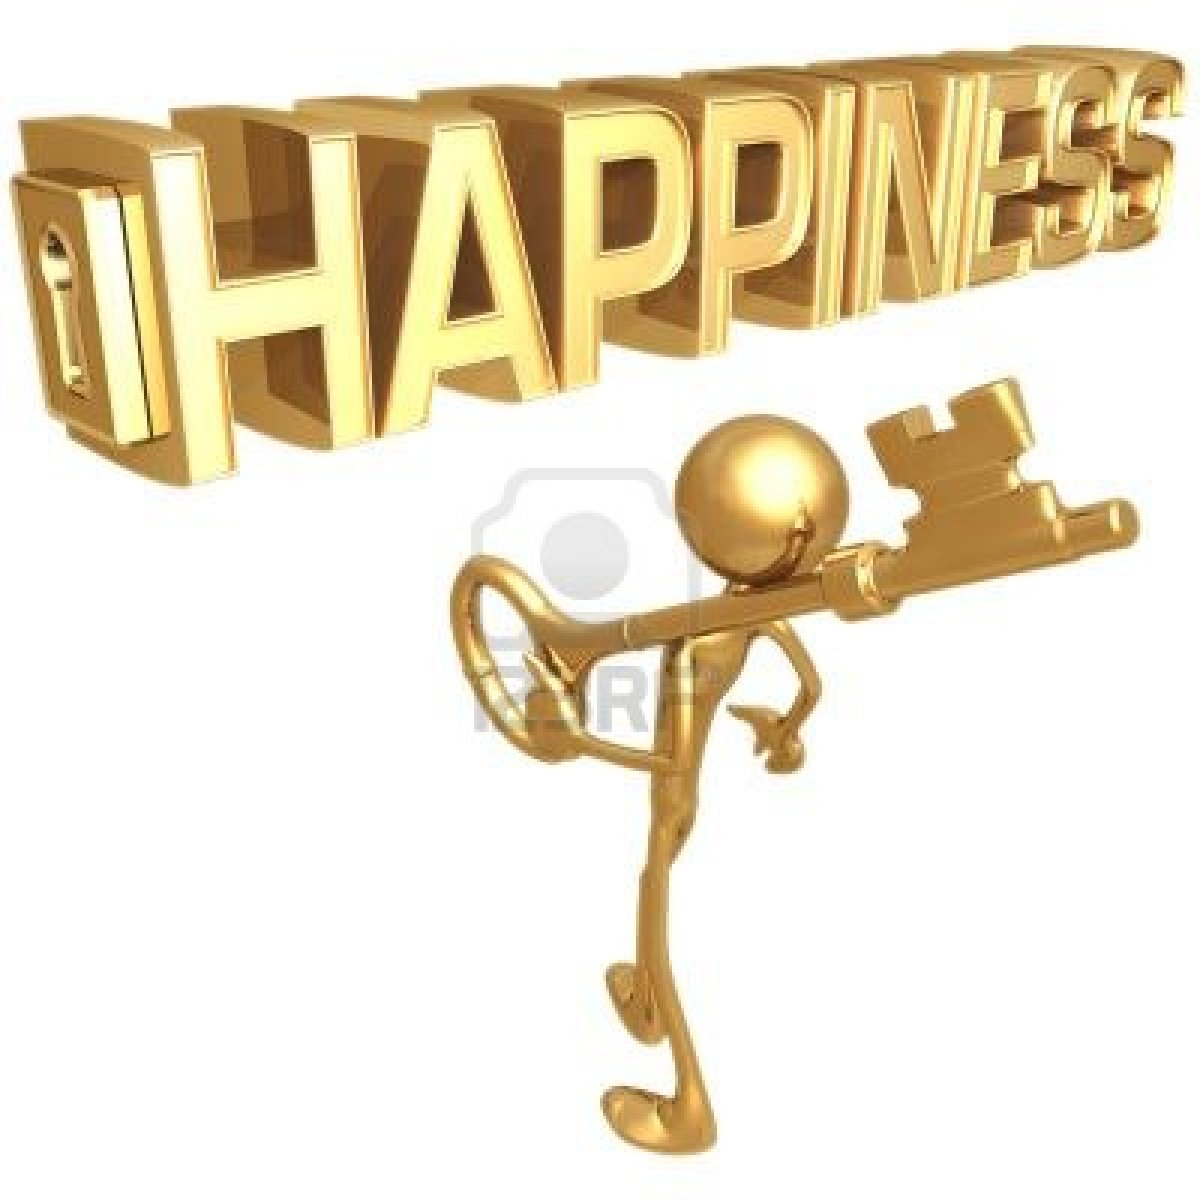 380408-key-to-happiness.jpg